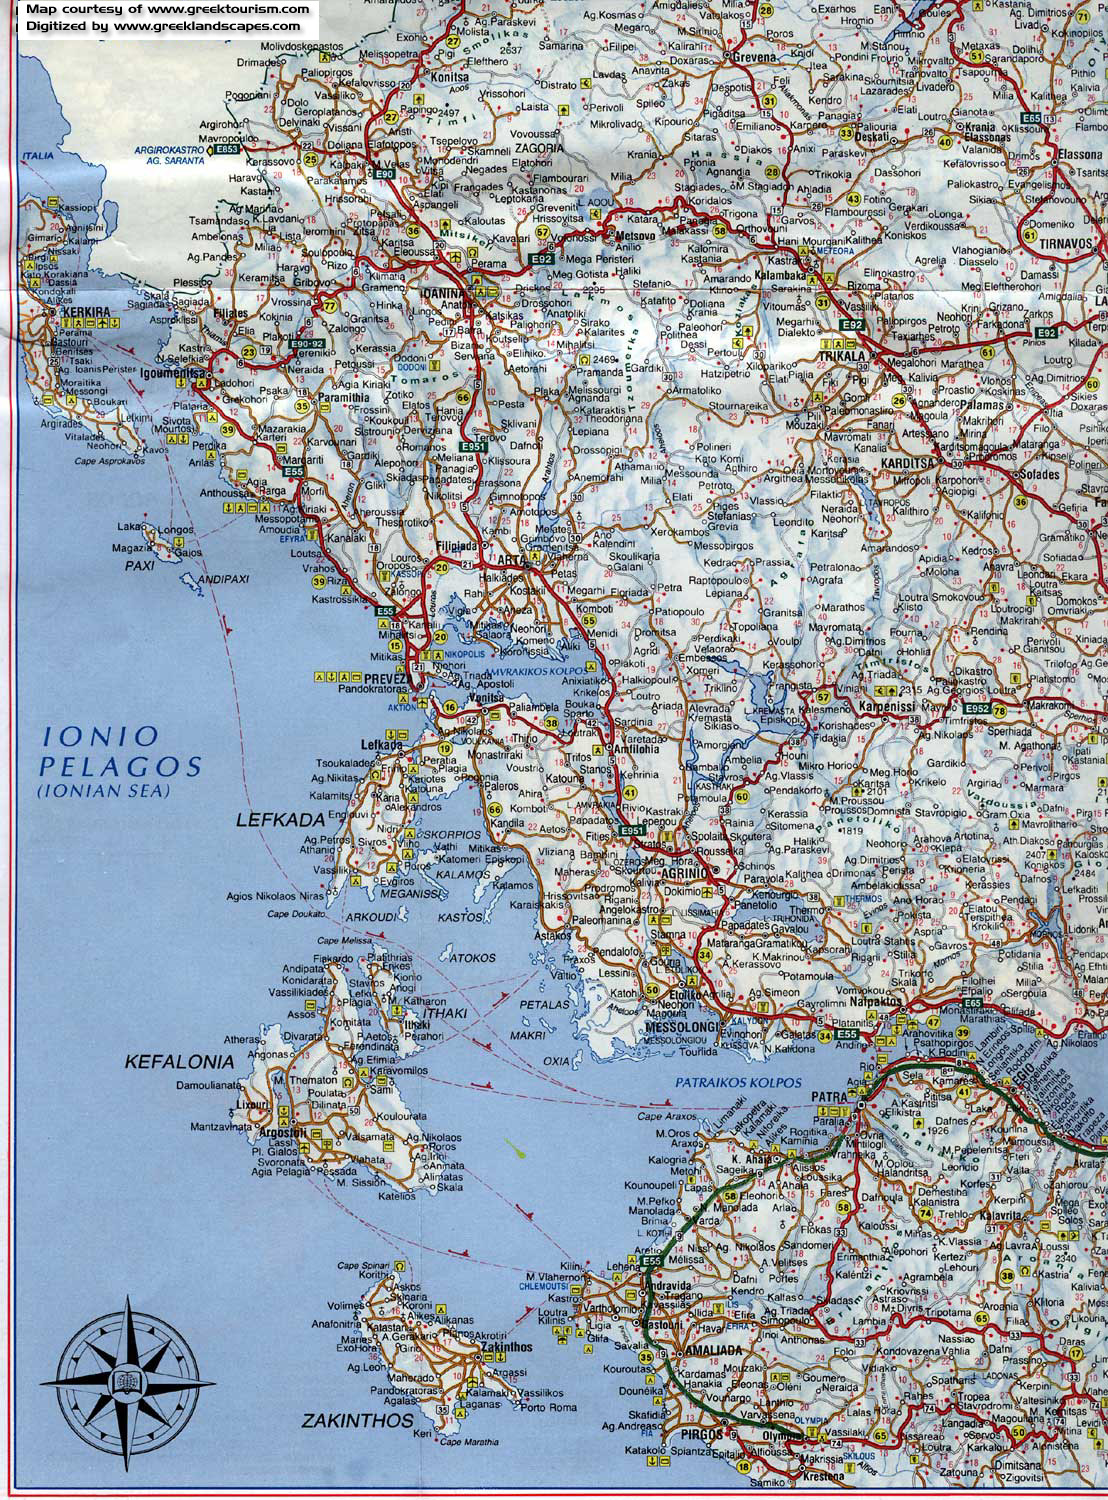 Road map to Greece - Lefkada, Kefalonia, Zakinthos, Patras 